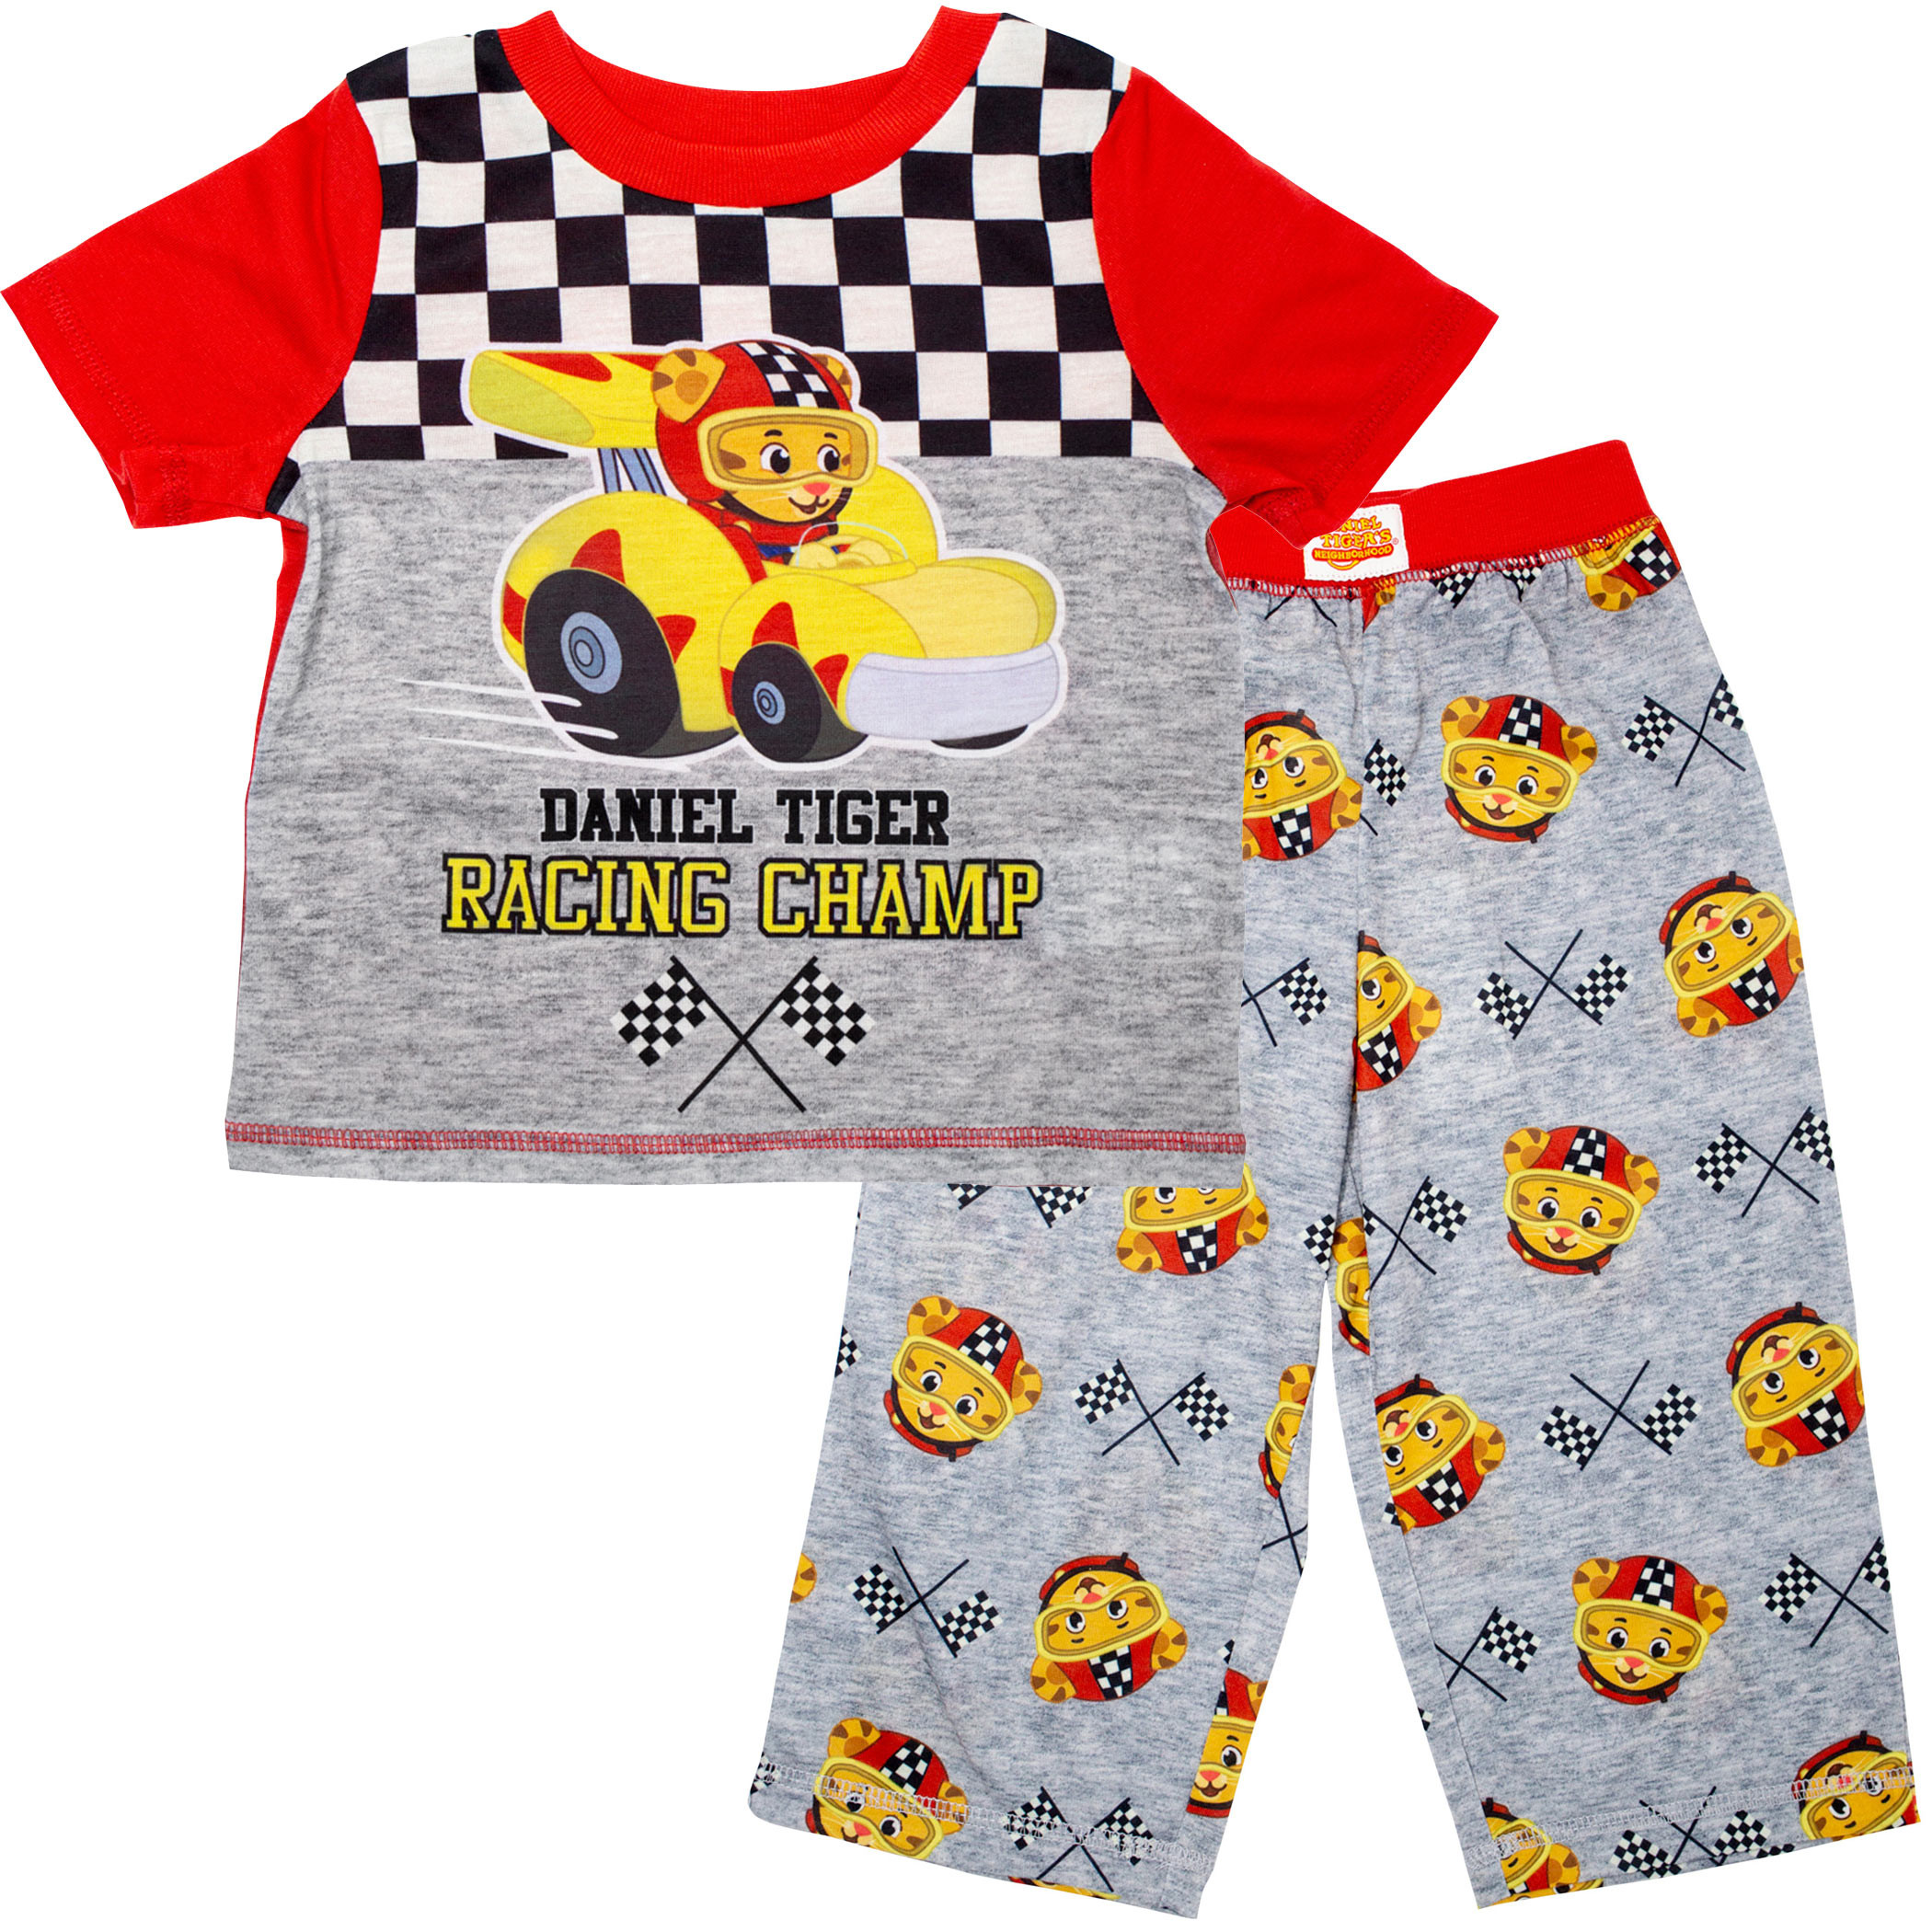 Daniel Tiger Racing Champ Toddlers Shirt & Pants Sleep Set